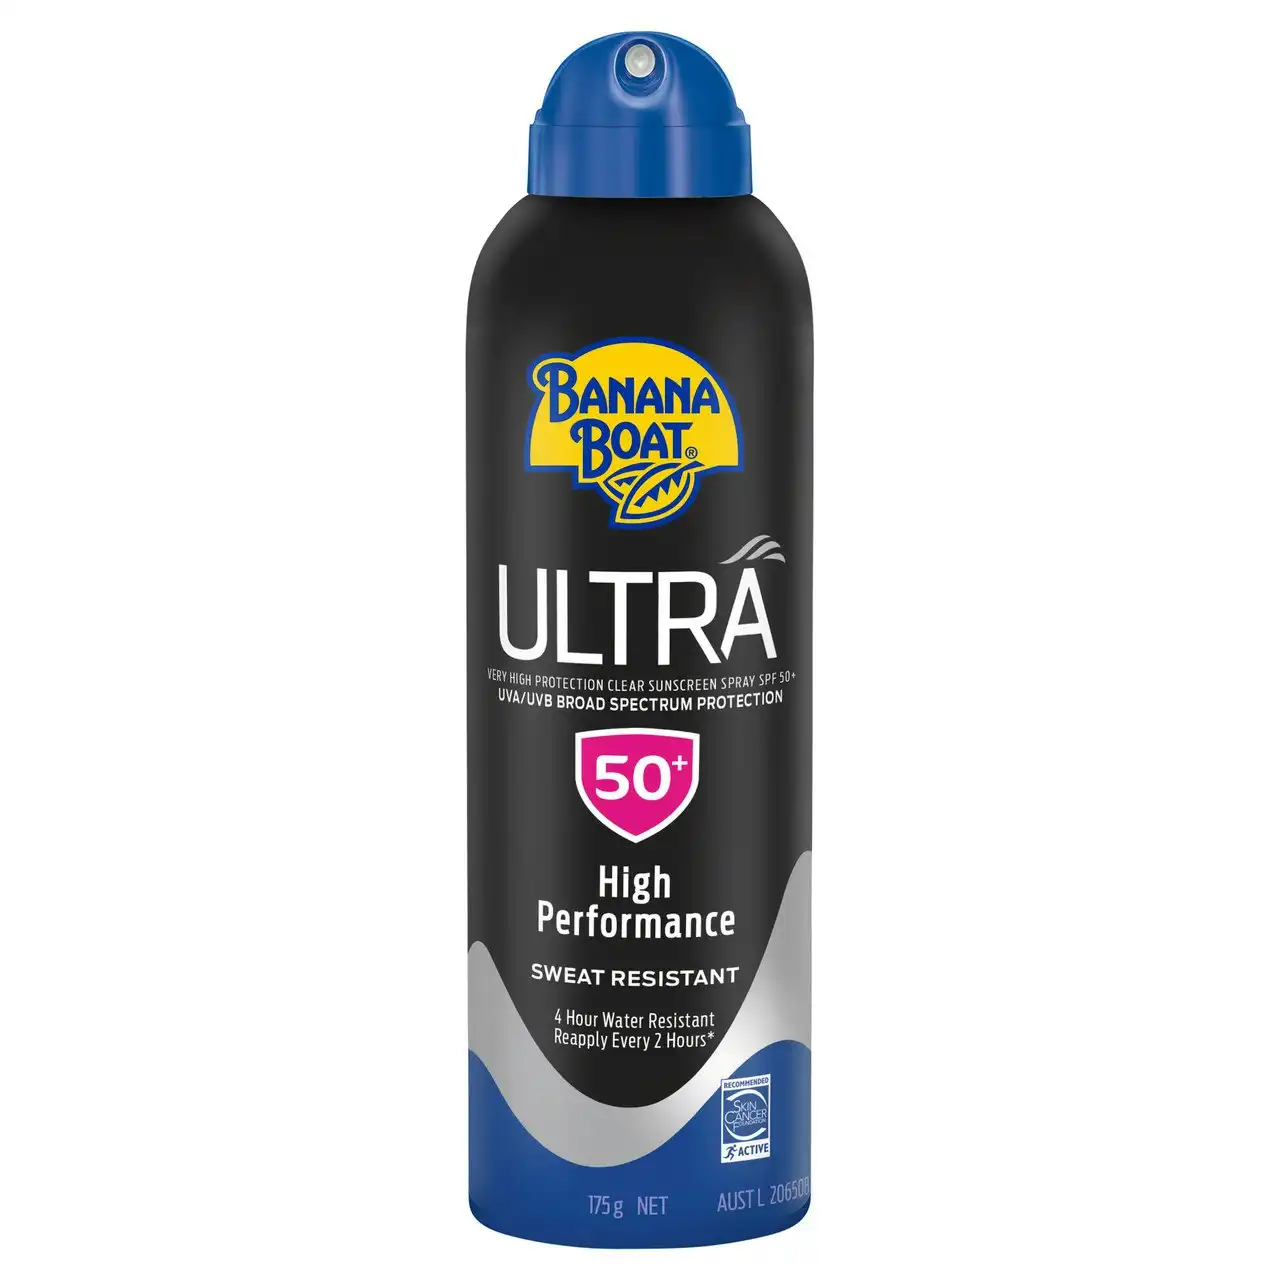 Banana Boat Ultra Sunscreen Spray SPF 50+ 175g